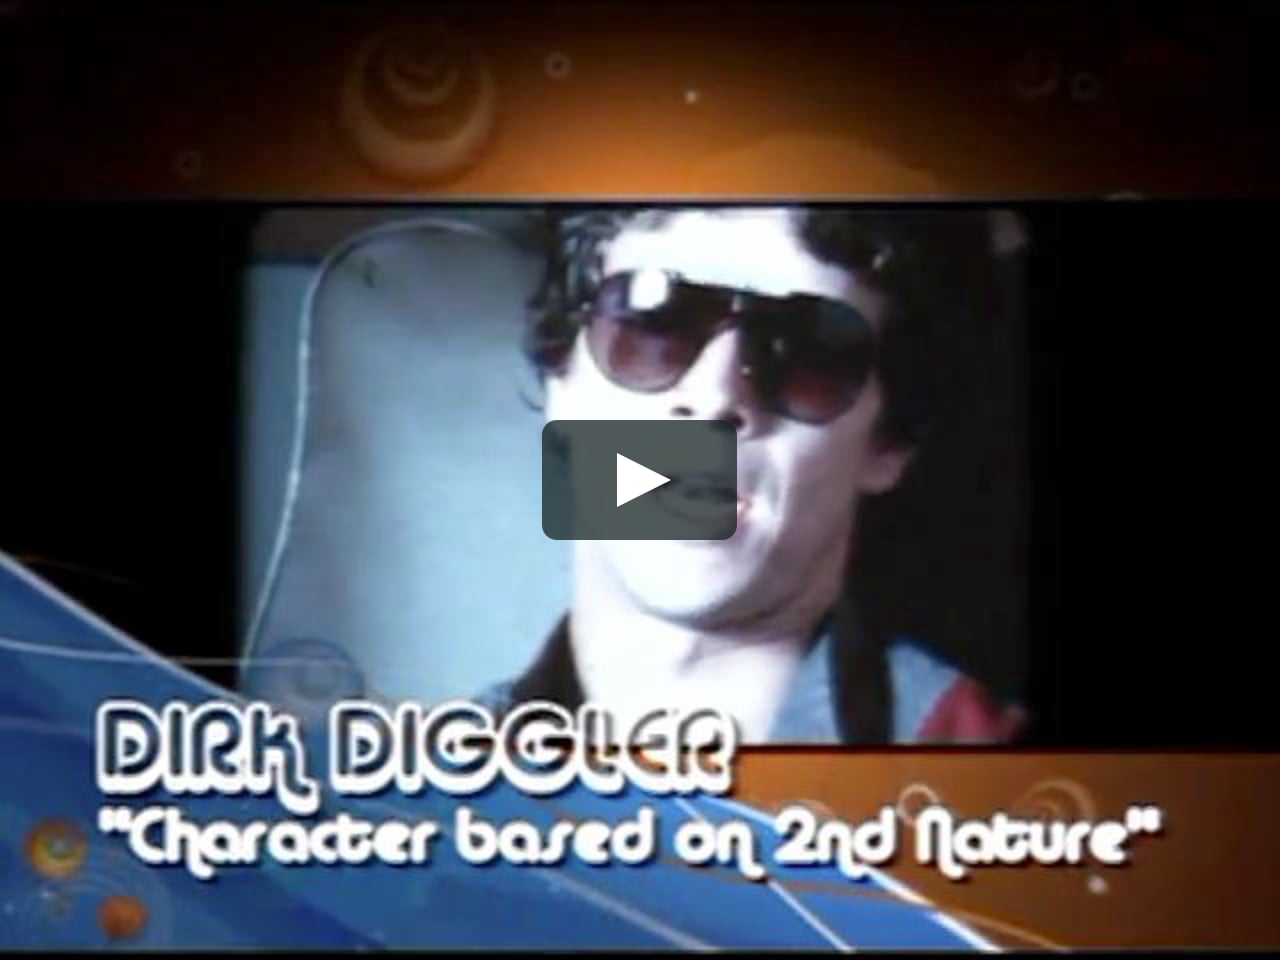 Dirk diggler videos